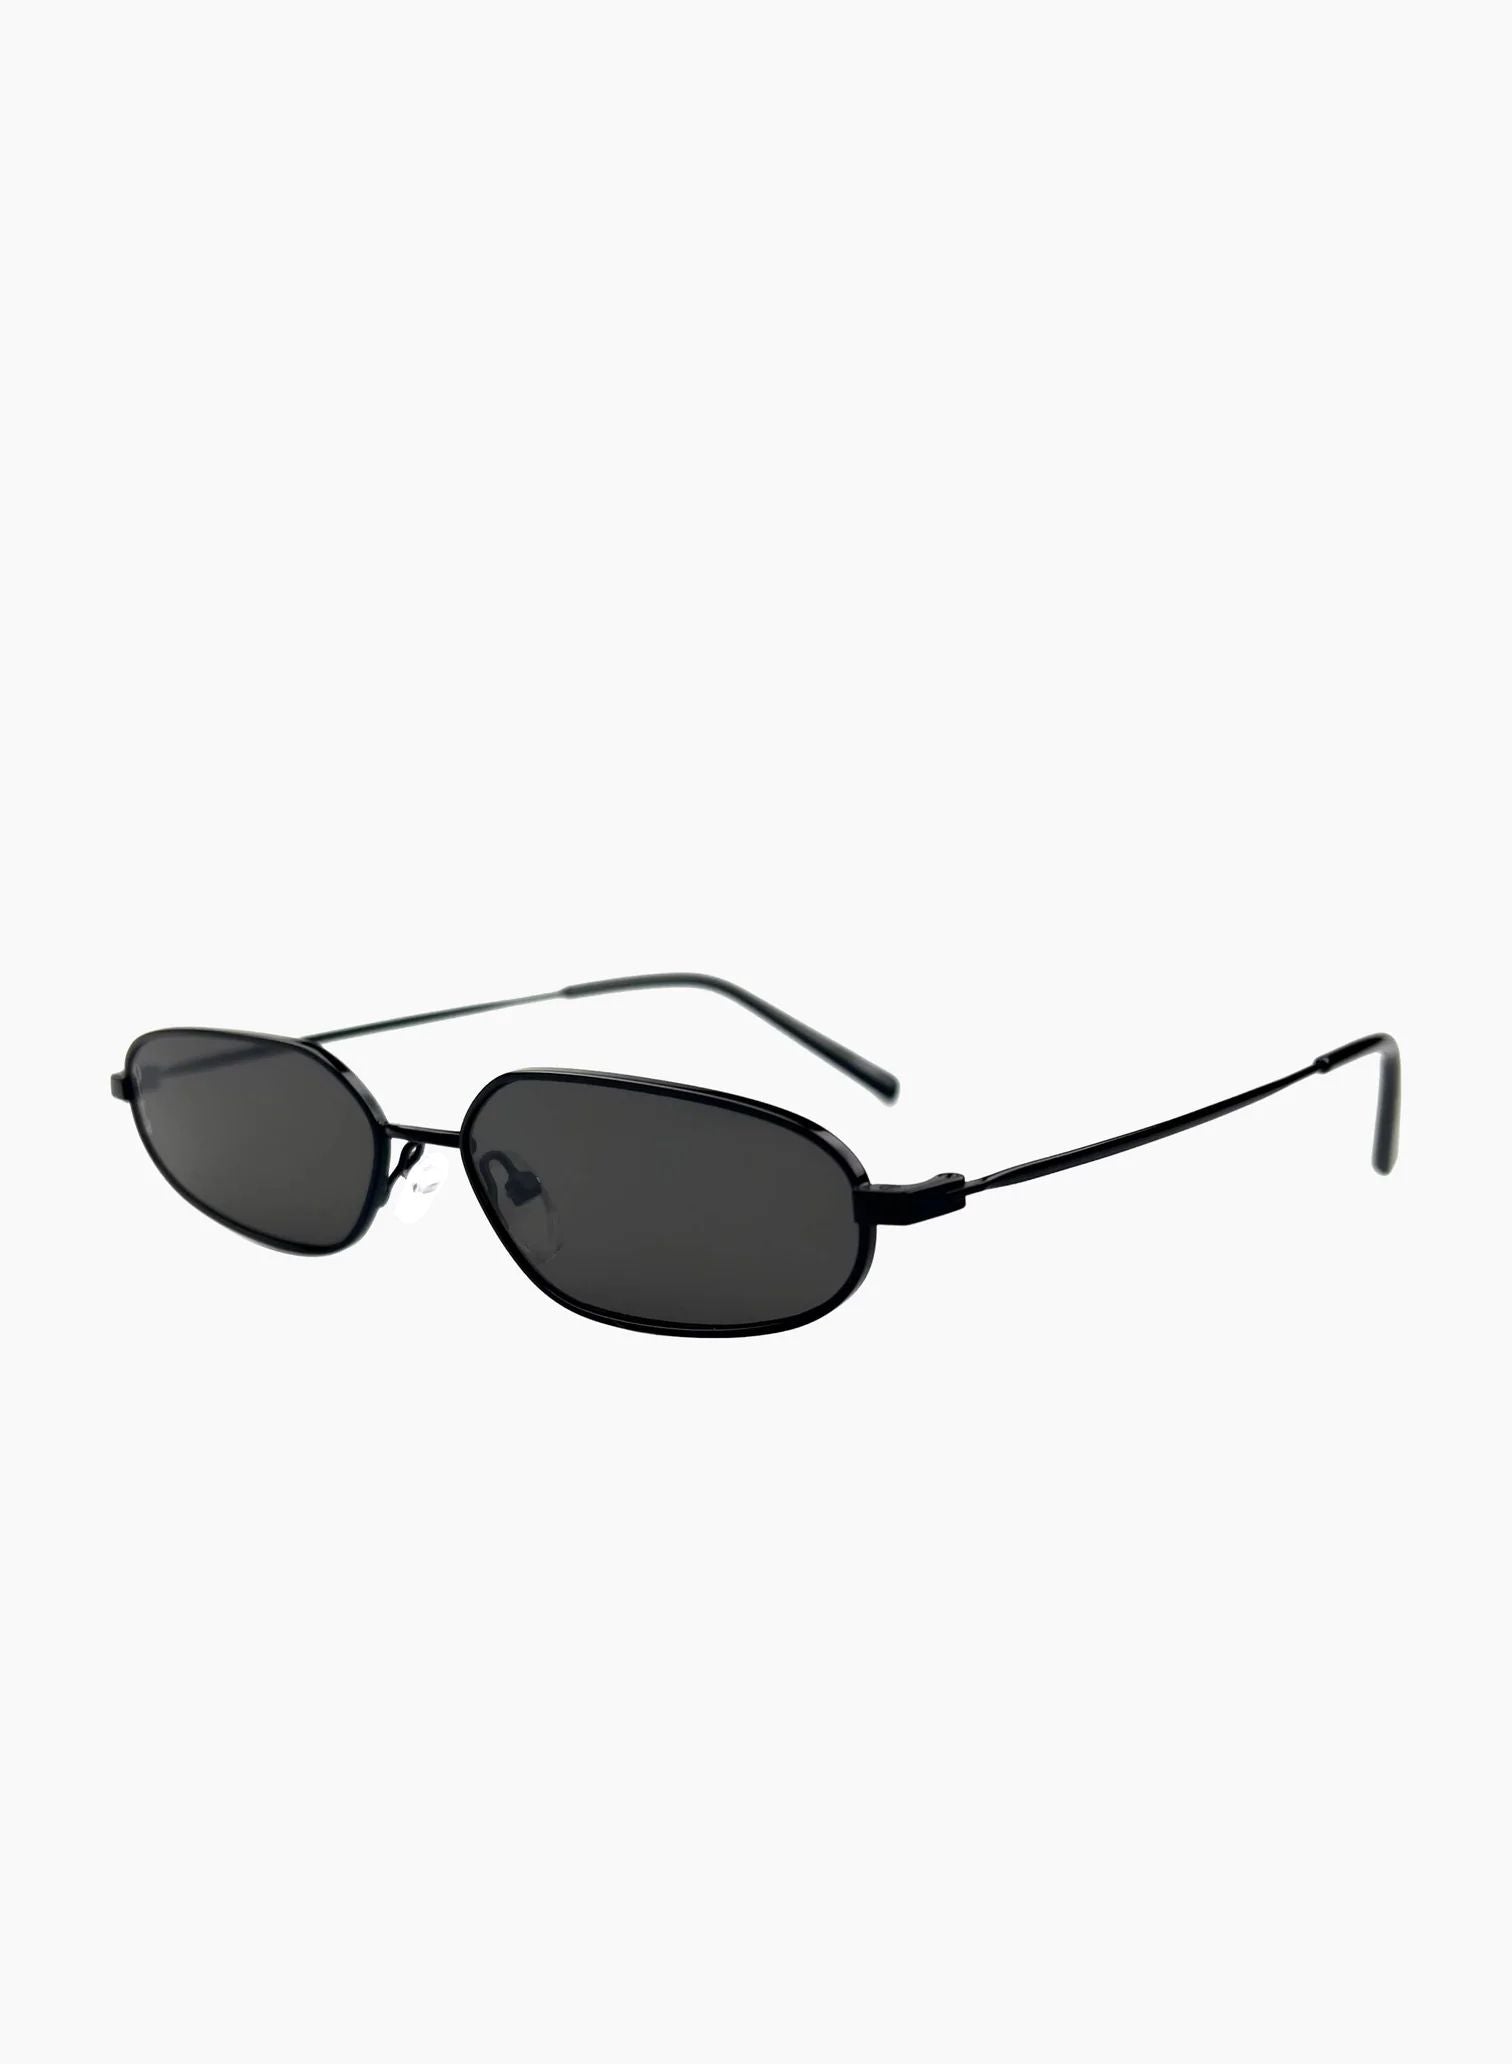 Drew Black/Smoke Lens Sunglasses